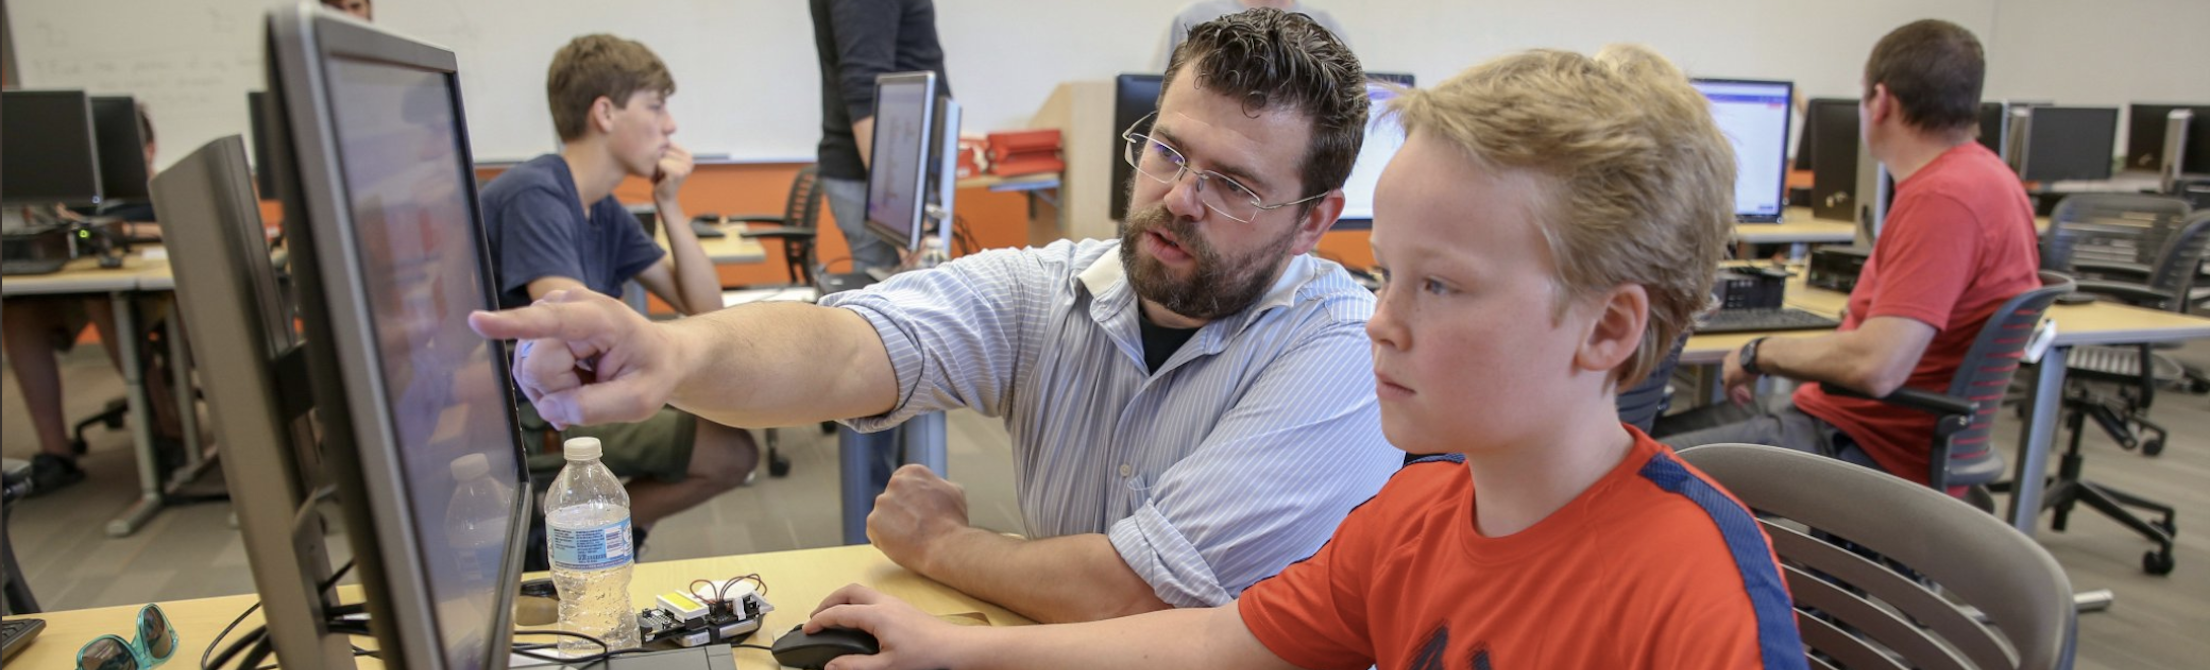 Dr. Borowczak helping a student at a computer